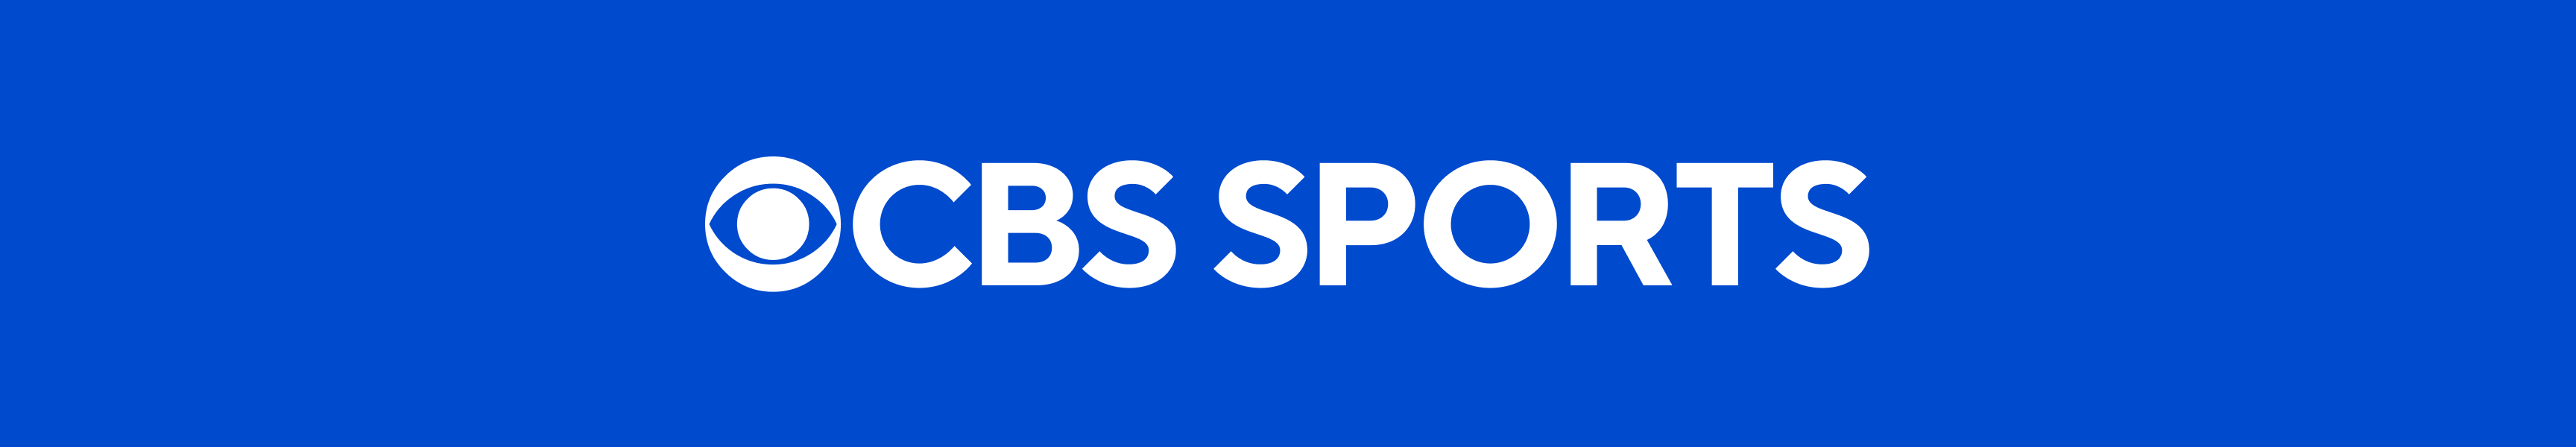 CBS Sports T-shirts à manches longues